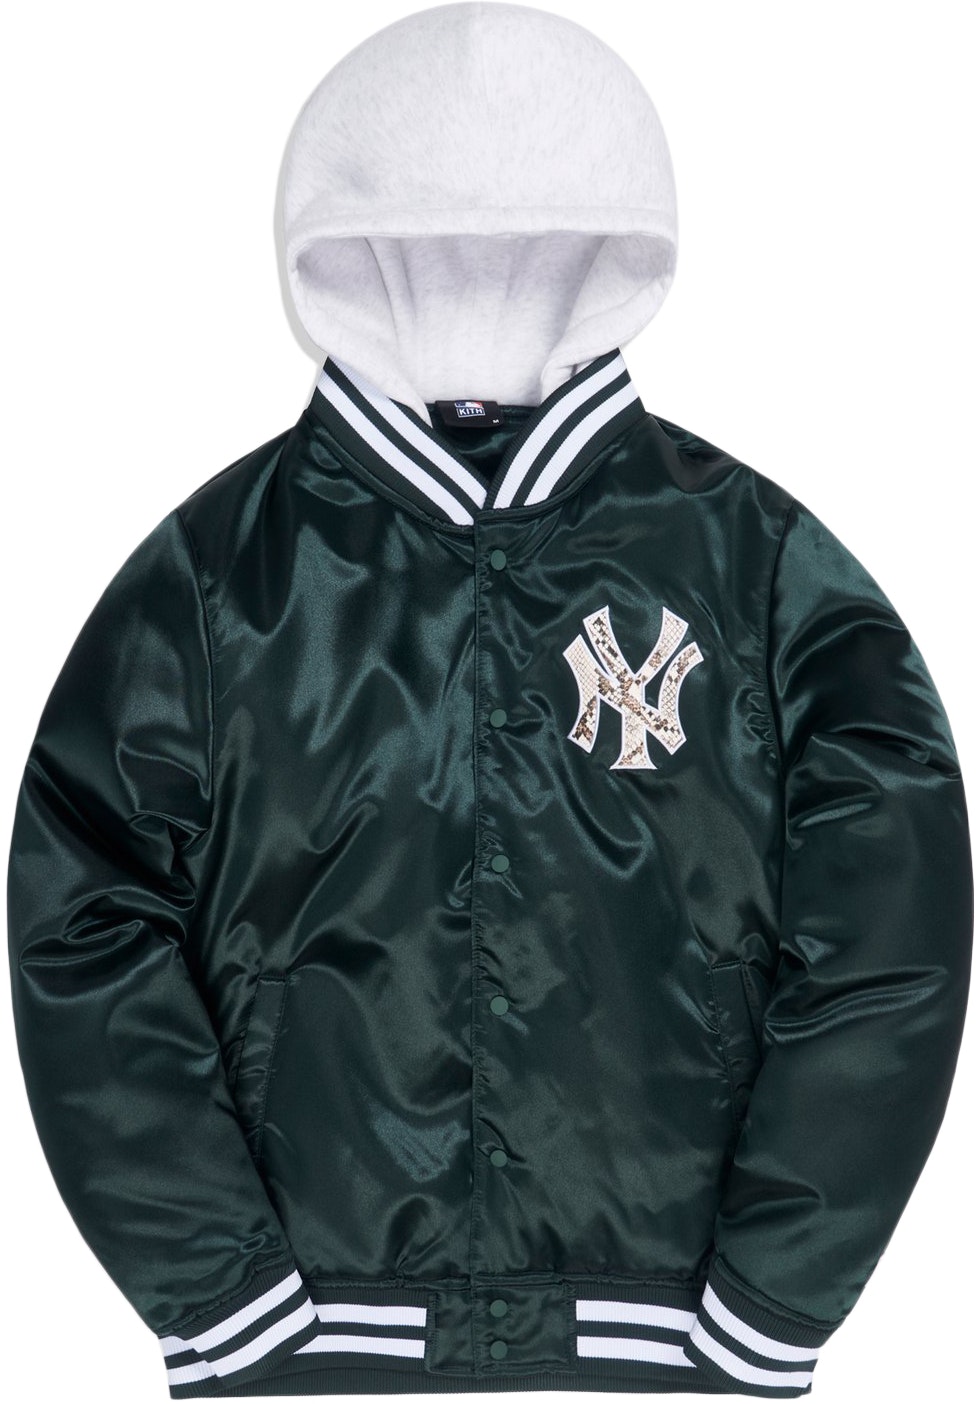 KITH For Major League Baseball New York Yankees Gorman Jacket